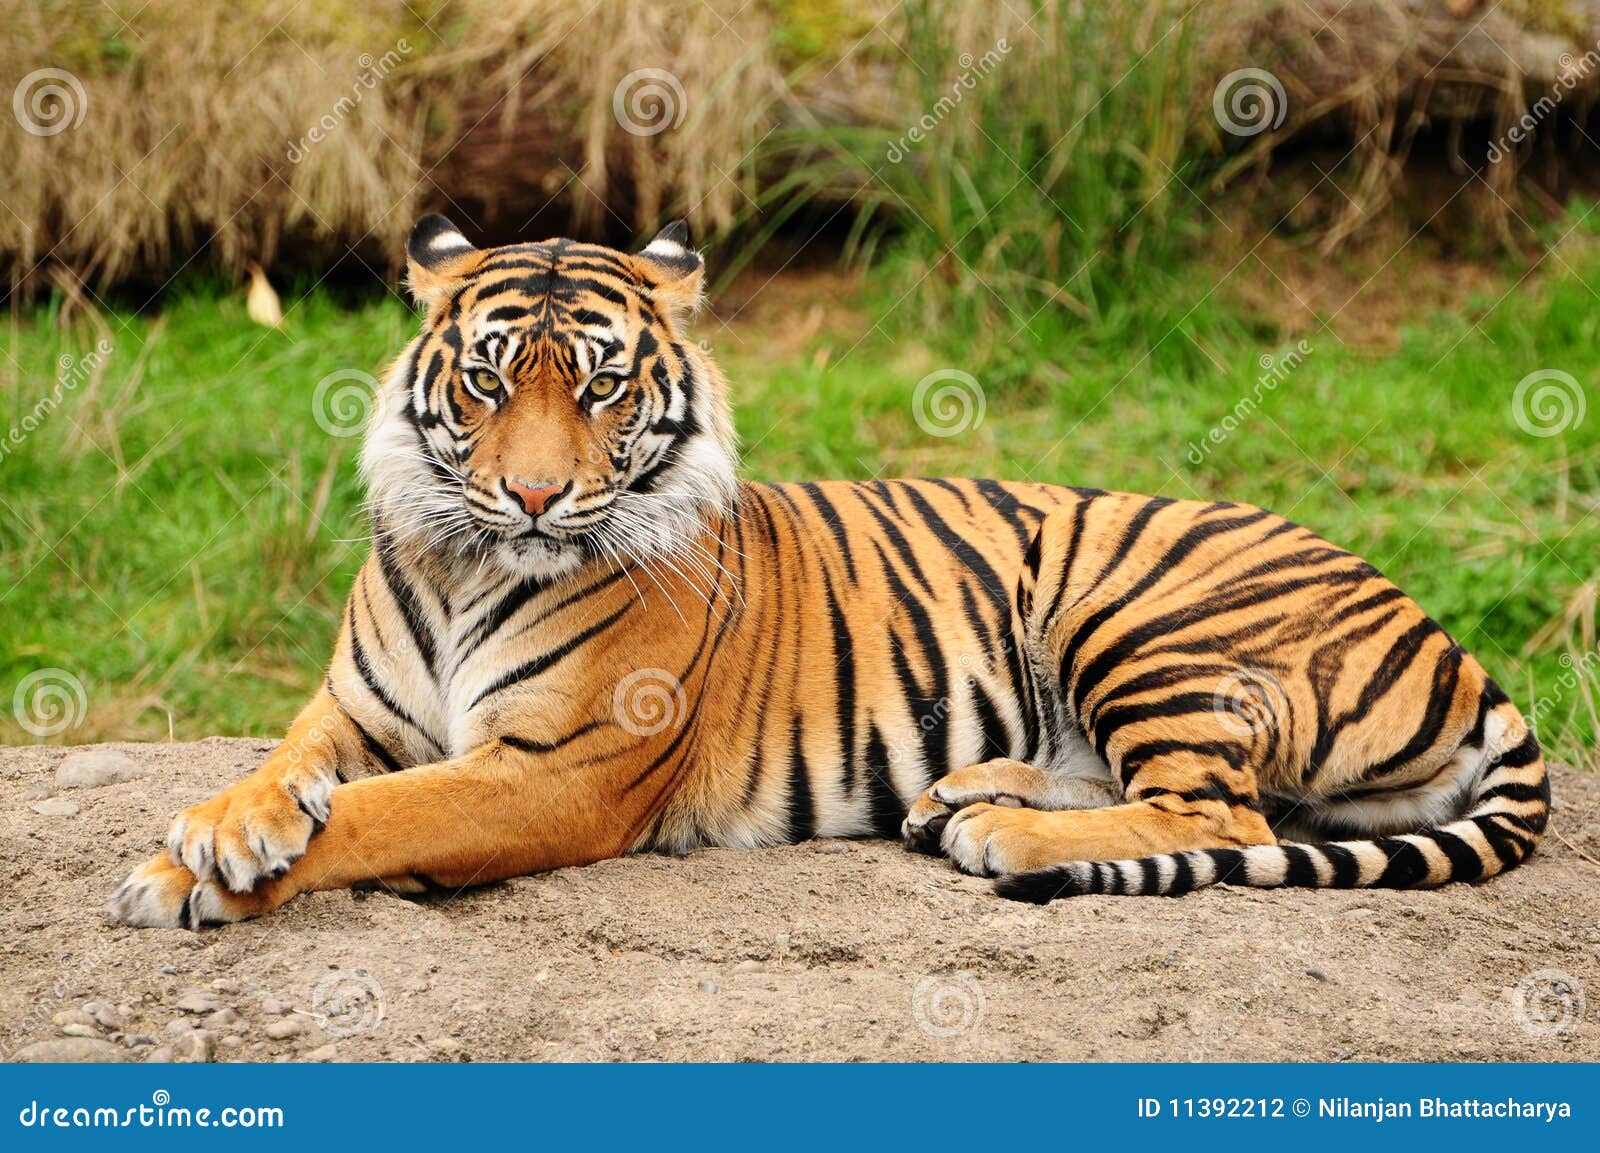 tiger portrait horizontal